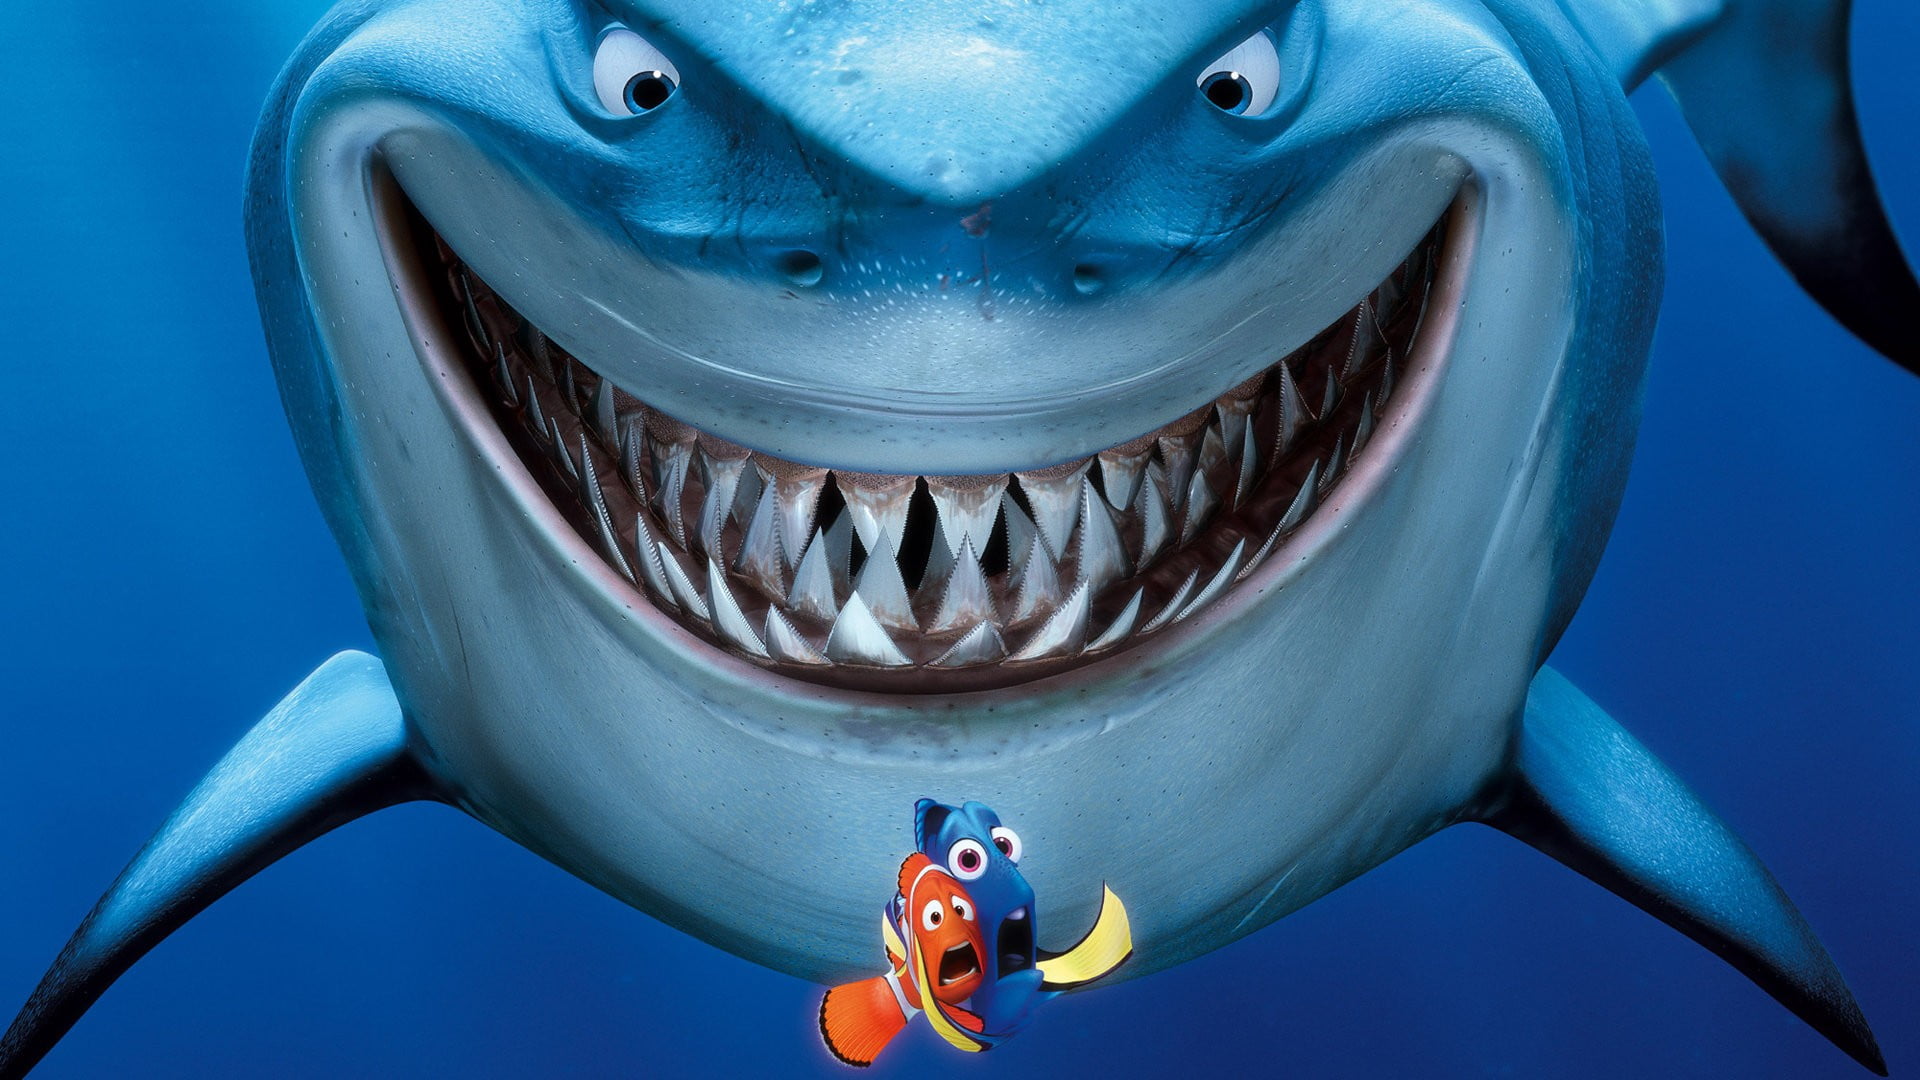 Finding Nemo movie, movies, Finding Nemo, shark, movie poster